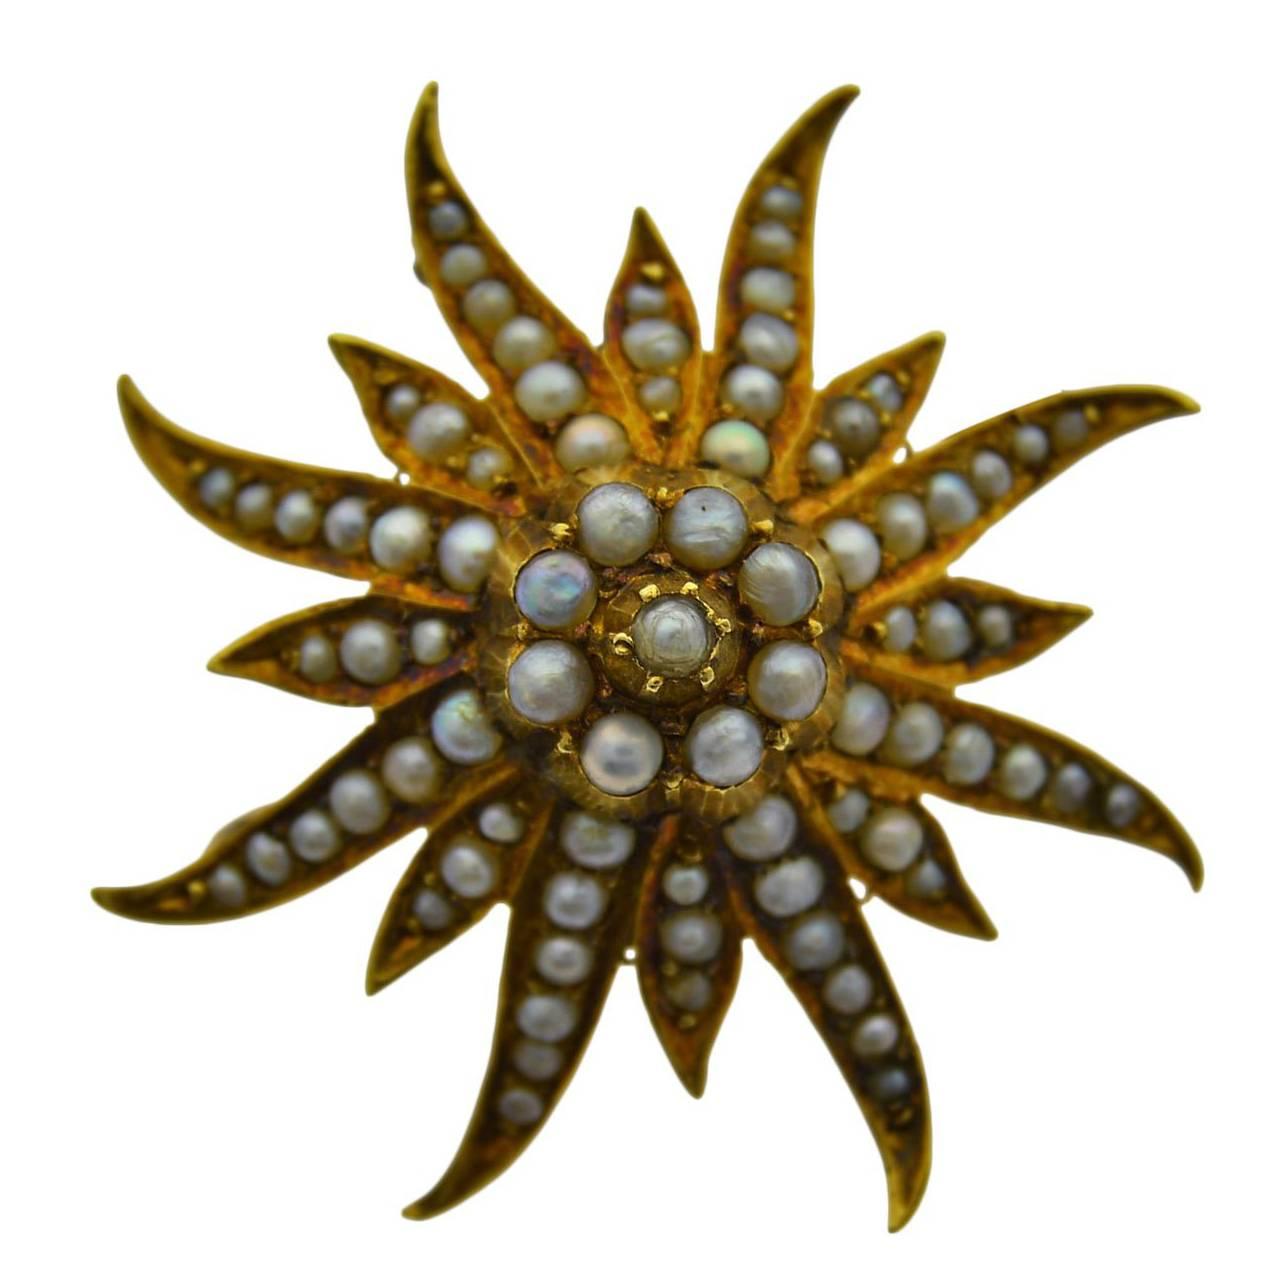 14 Karat Solid Yellow Gold Sea Anemone, Starfish or the Sun